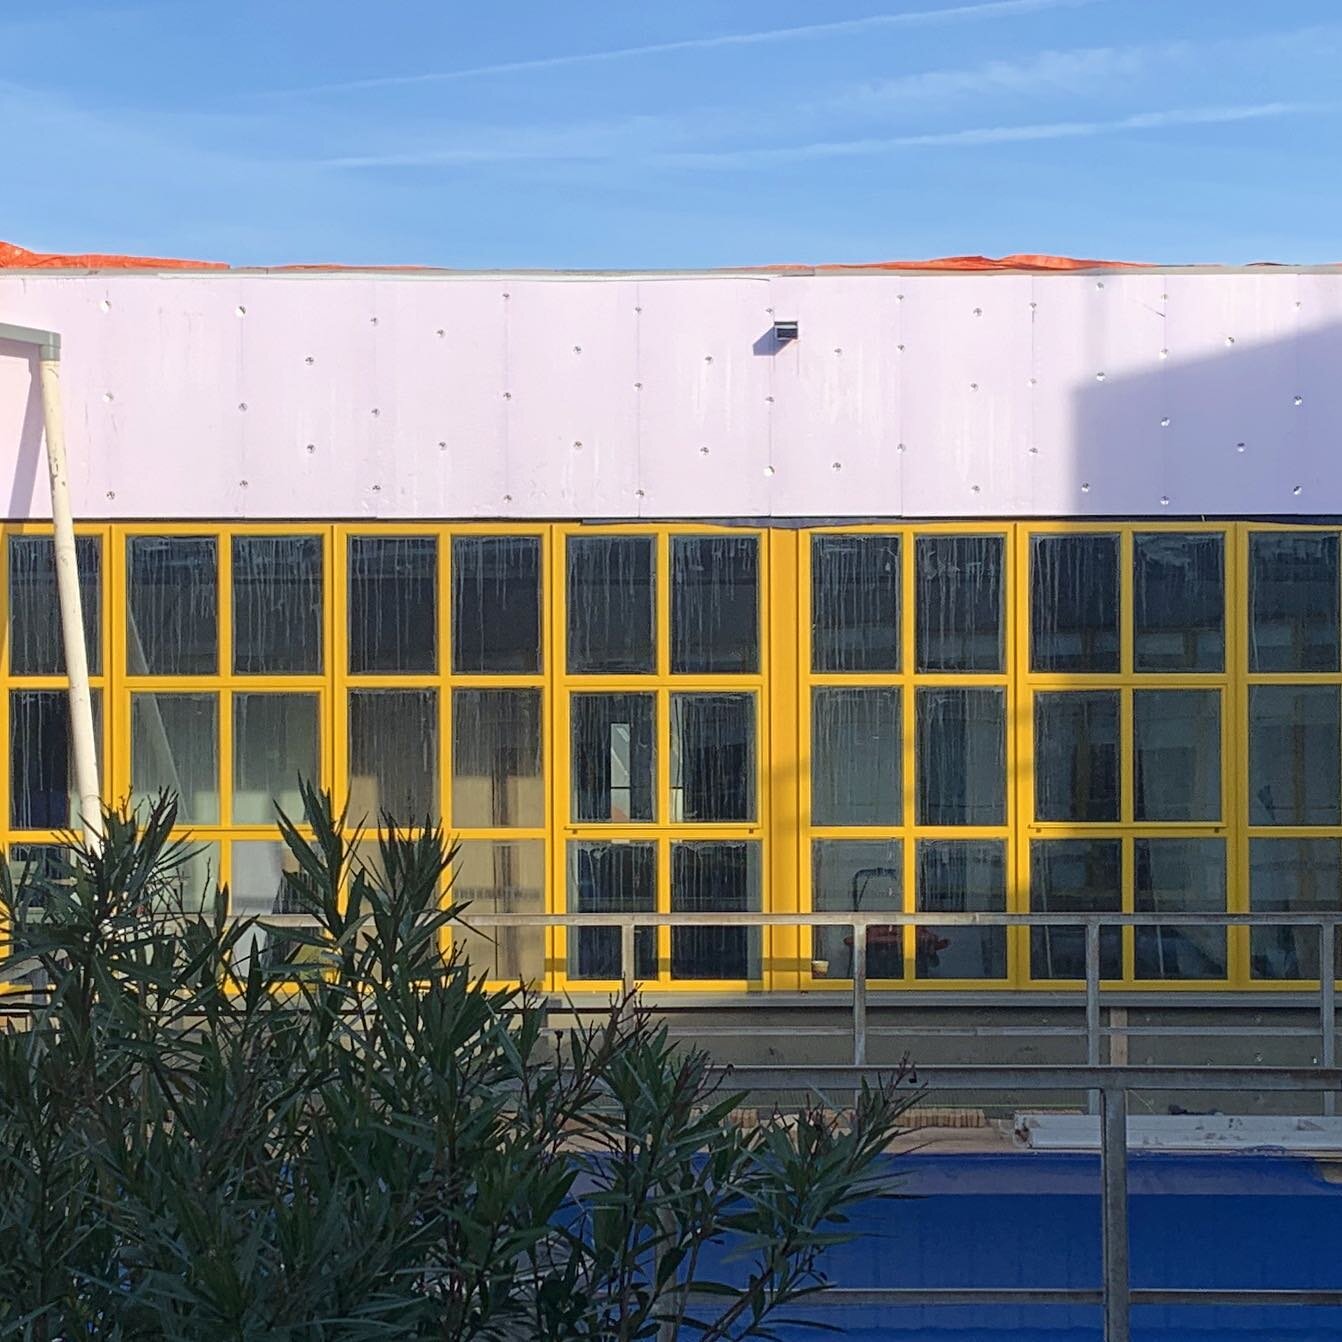 Bacinol, who is afraid of yellow, Delft, 2022
#bacinol #architecture #architect #architecturedaily #architecturelovers #arquitectura #steelwindows #delft #monument #rijksmonument #studioharders #yellow #facade #steel #extension #office #officedesign 